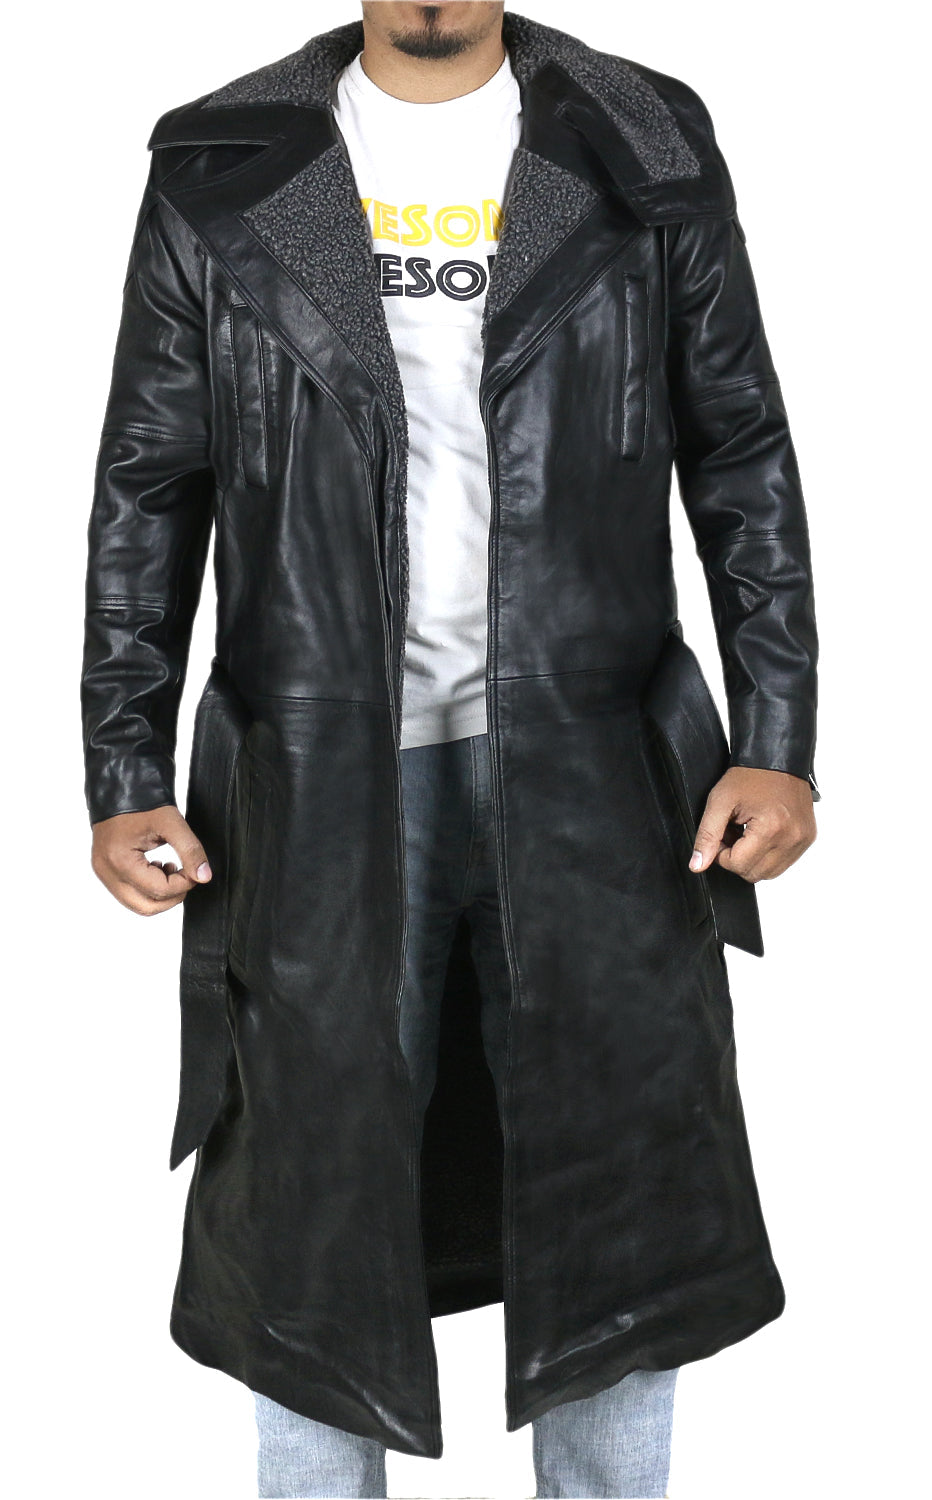 Leather Jackets Hub Mens Genuine Lambskin Leather Long Coat (Black, Parka Coat) - 1702044